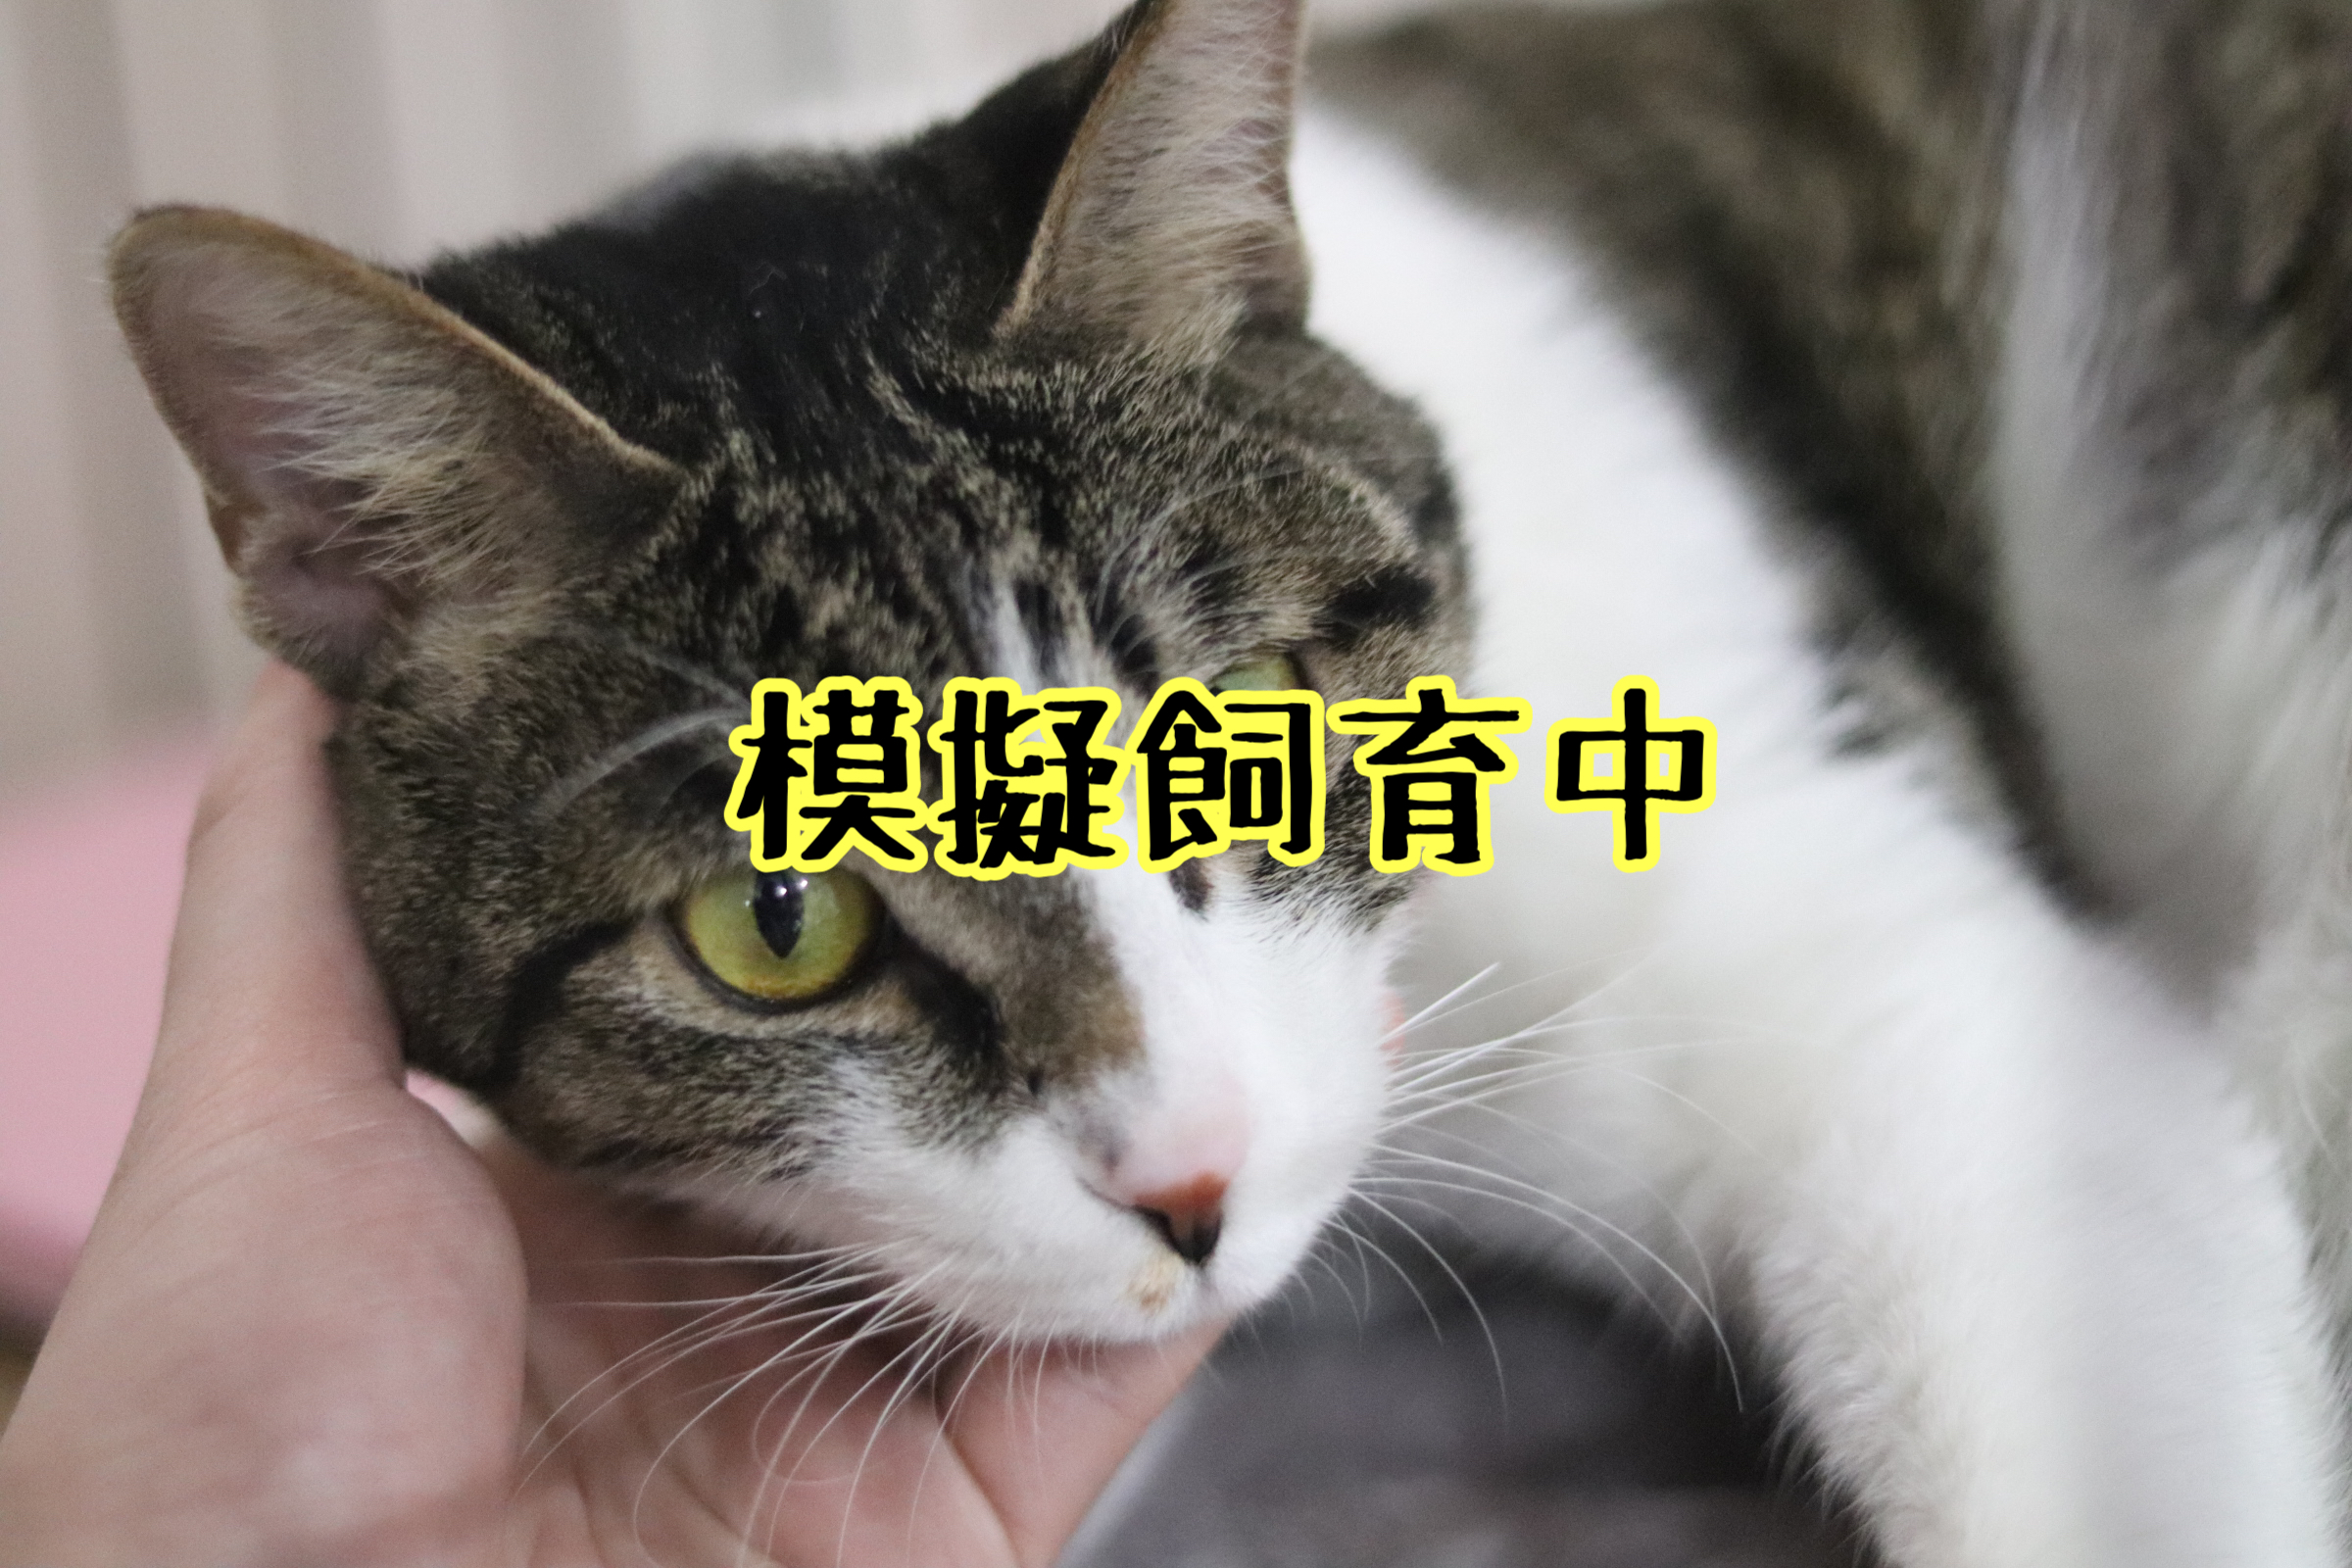 <ul>
<li>猫種：日本猫</li>
<li>名前（性別）：右側モツ(女の子)</li>
<li>年齢：2021年10月18日生まれ</li>
<li>保護経緯：離婚のため飼育困難</li>
</ul>
